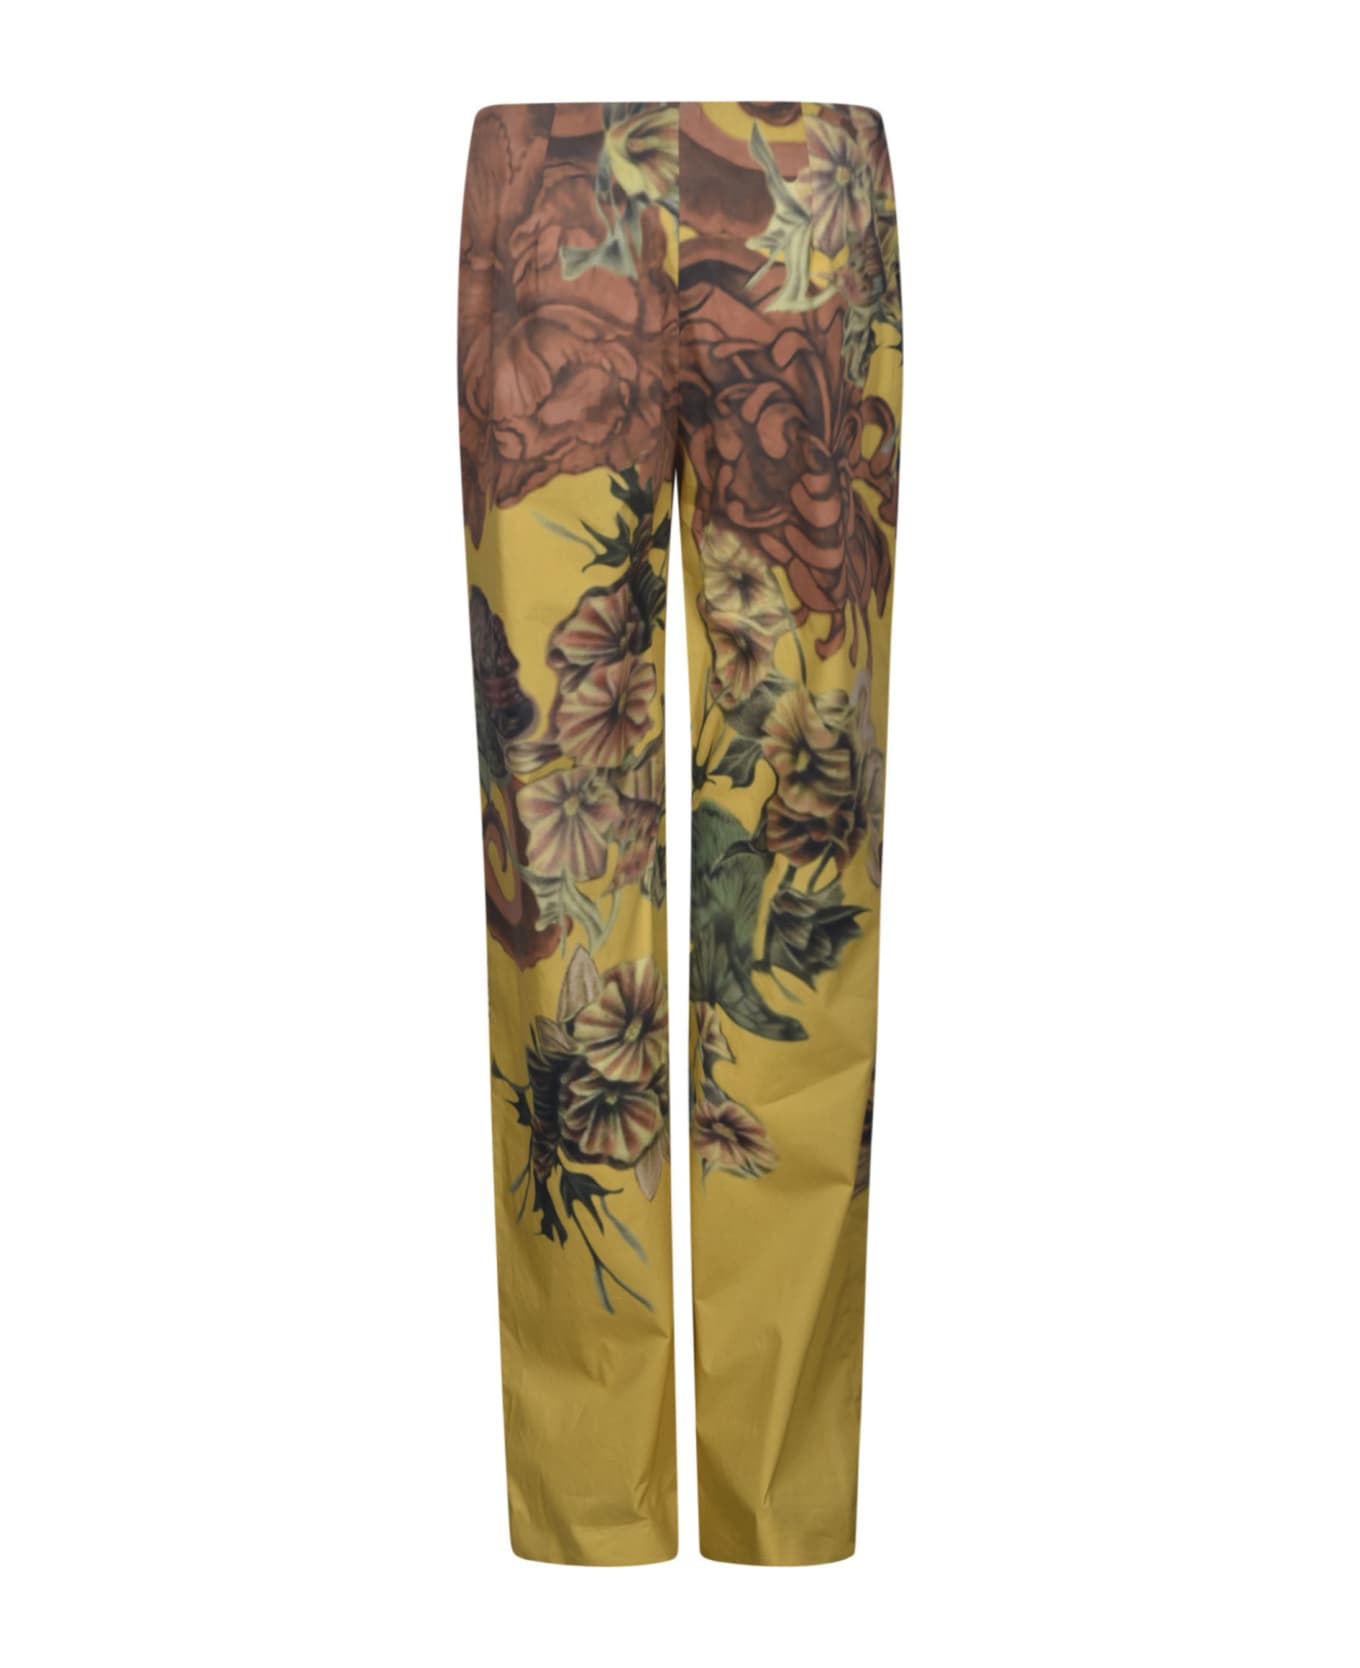 Alberta Ferretti Floral Print Trousers - Yellow/Brown